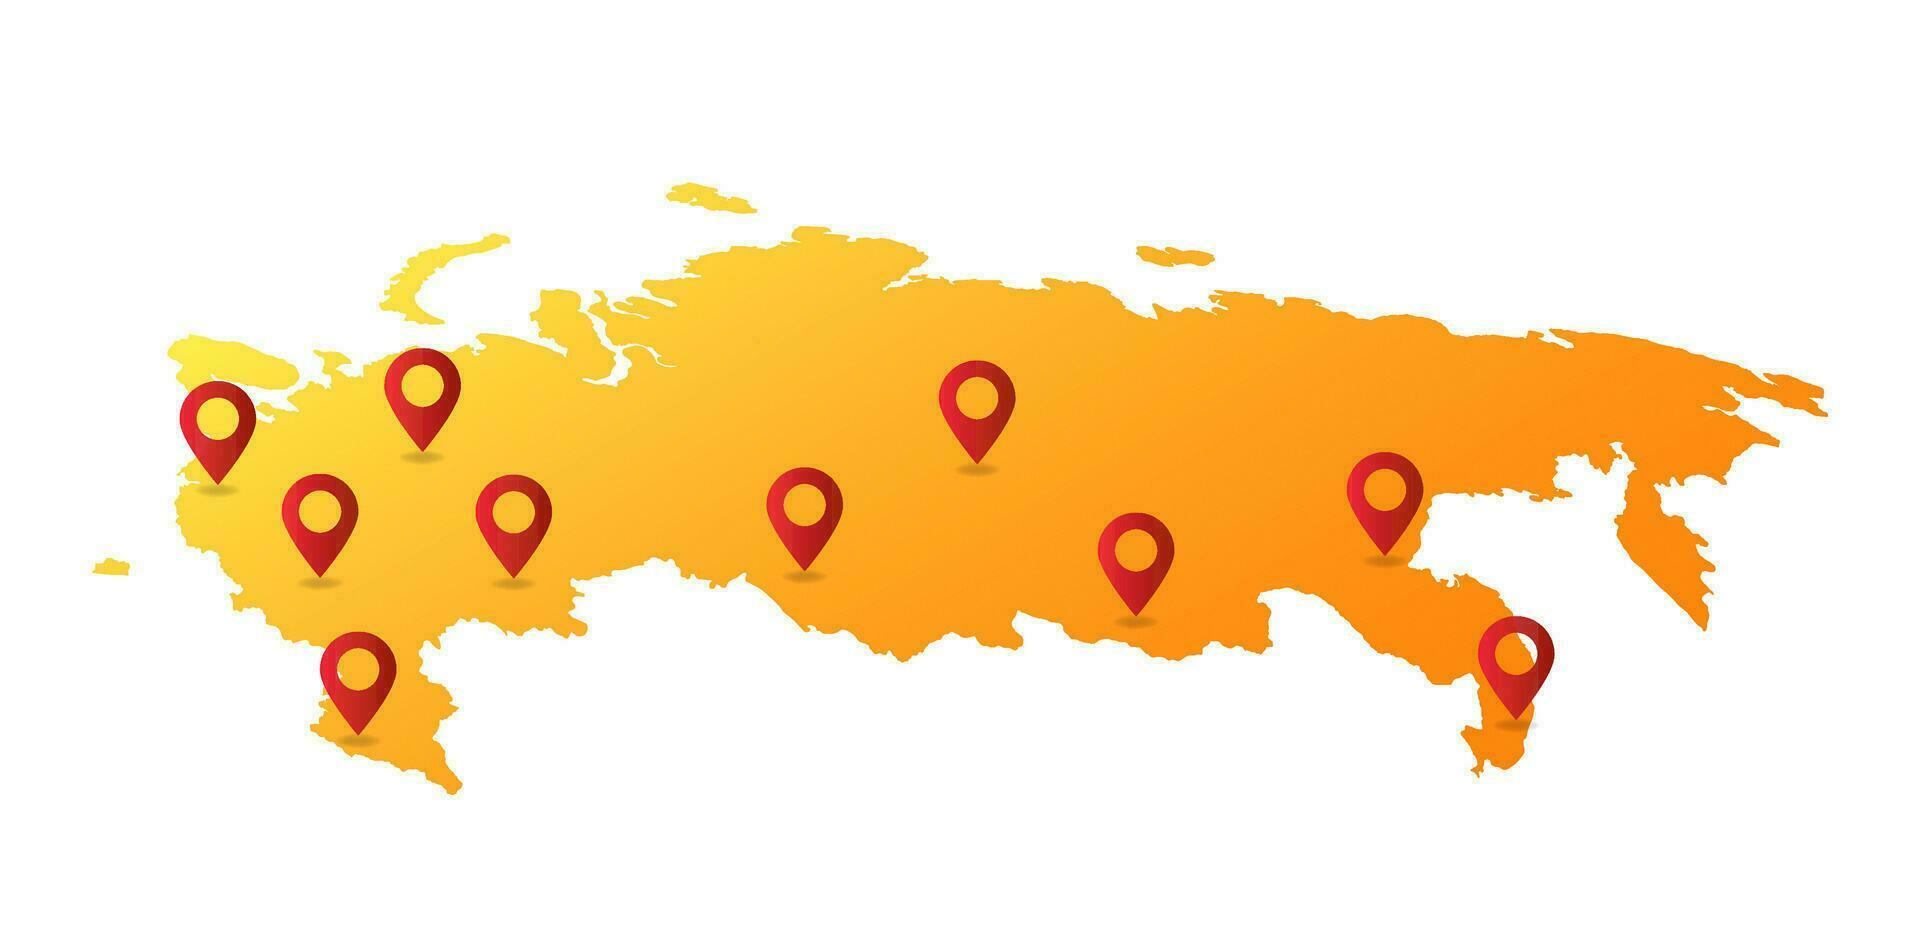 Rusia mapa alfiler ubicación vector ilustración